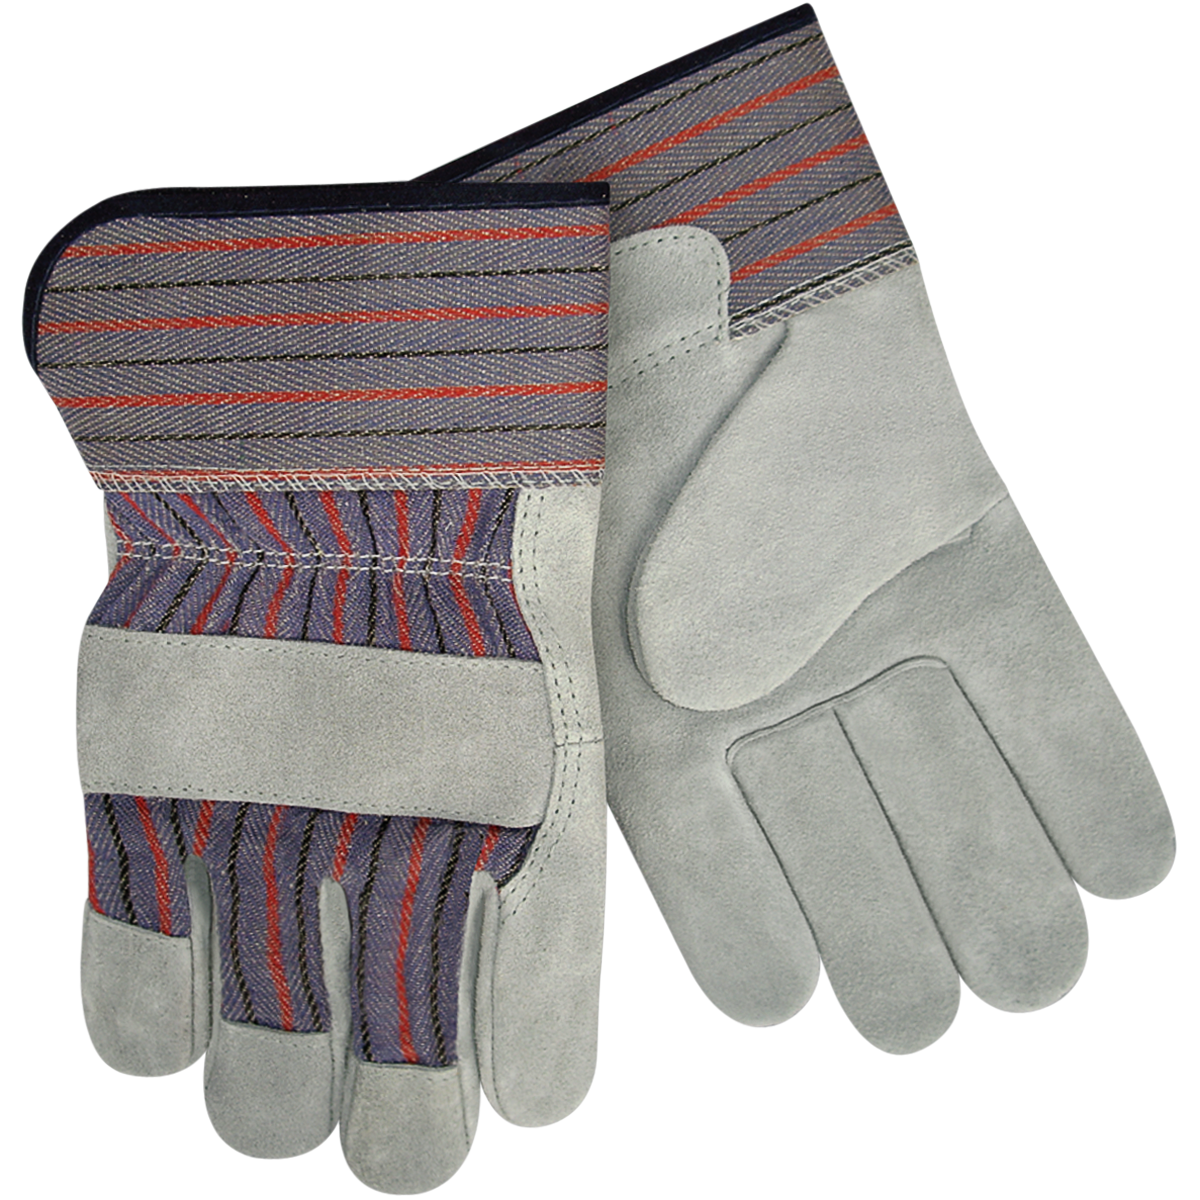 Work Gloves PNG Free File Download